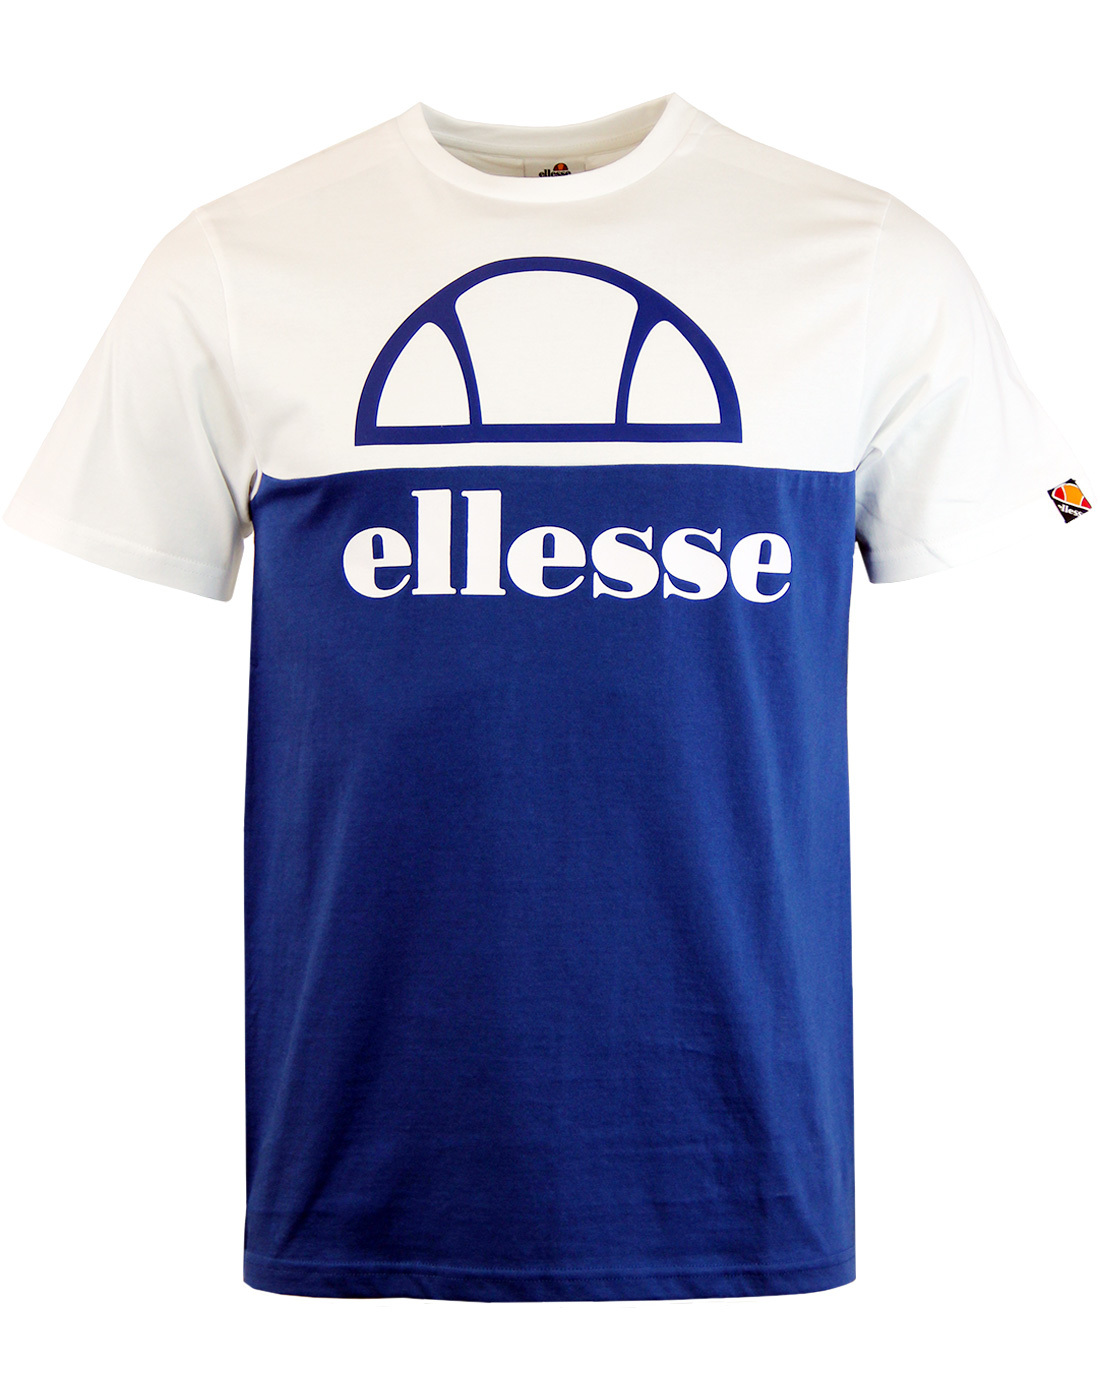 Olympico ELLESSE Cut & Sew Retro 80s Logo Tee in White/Blue